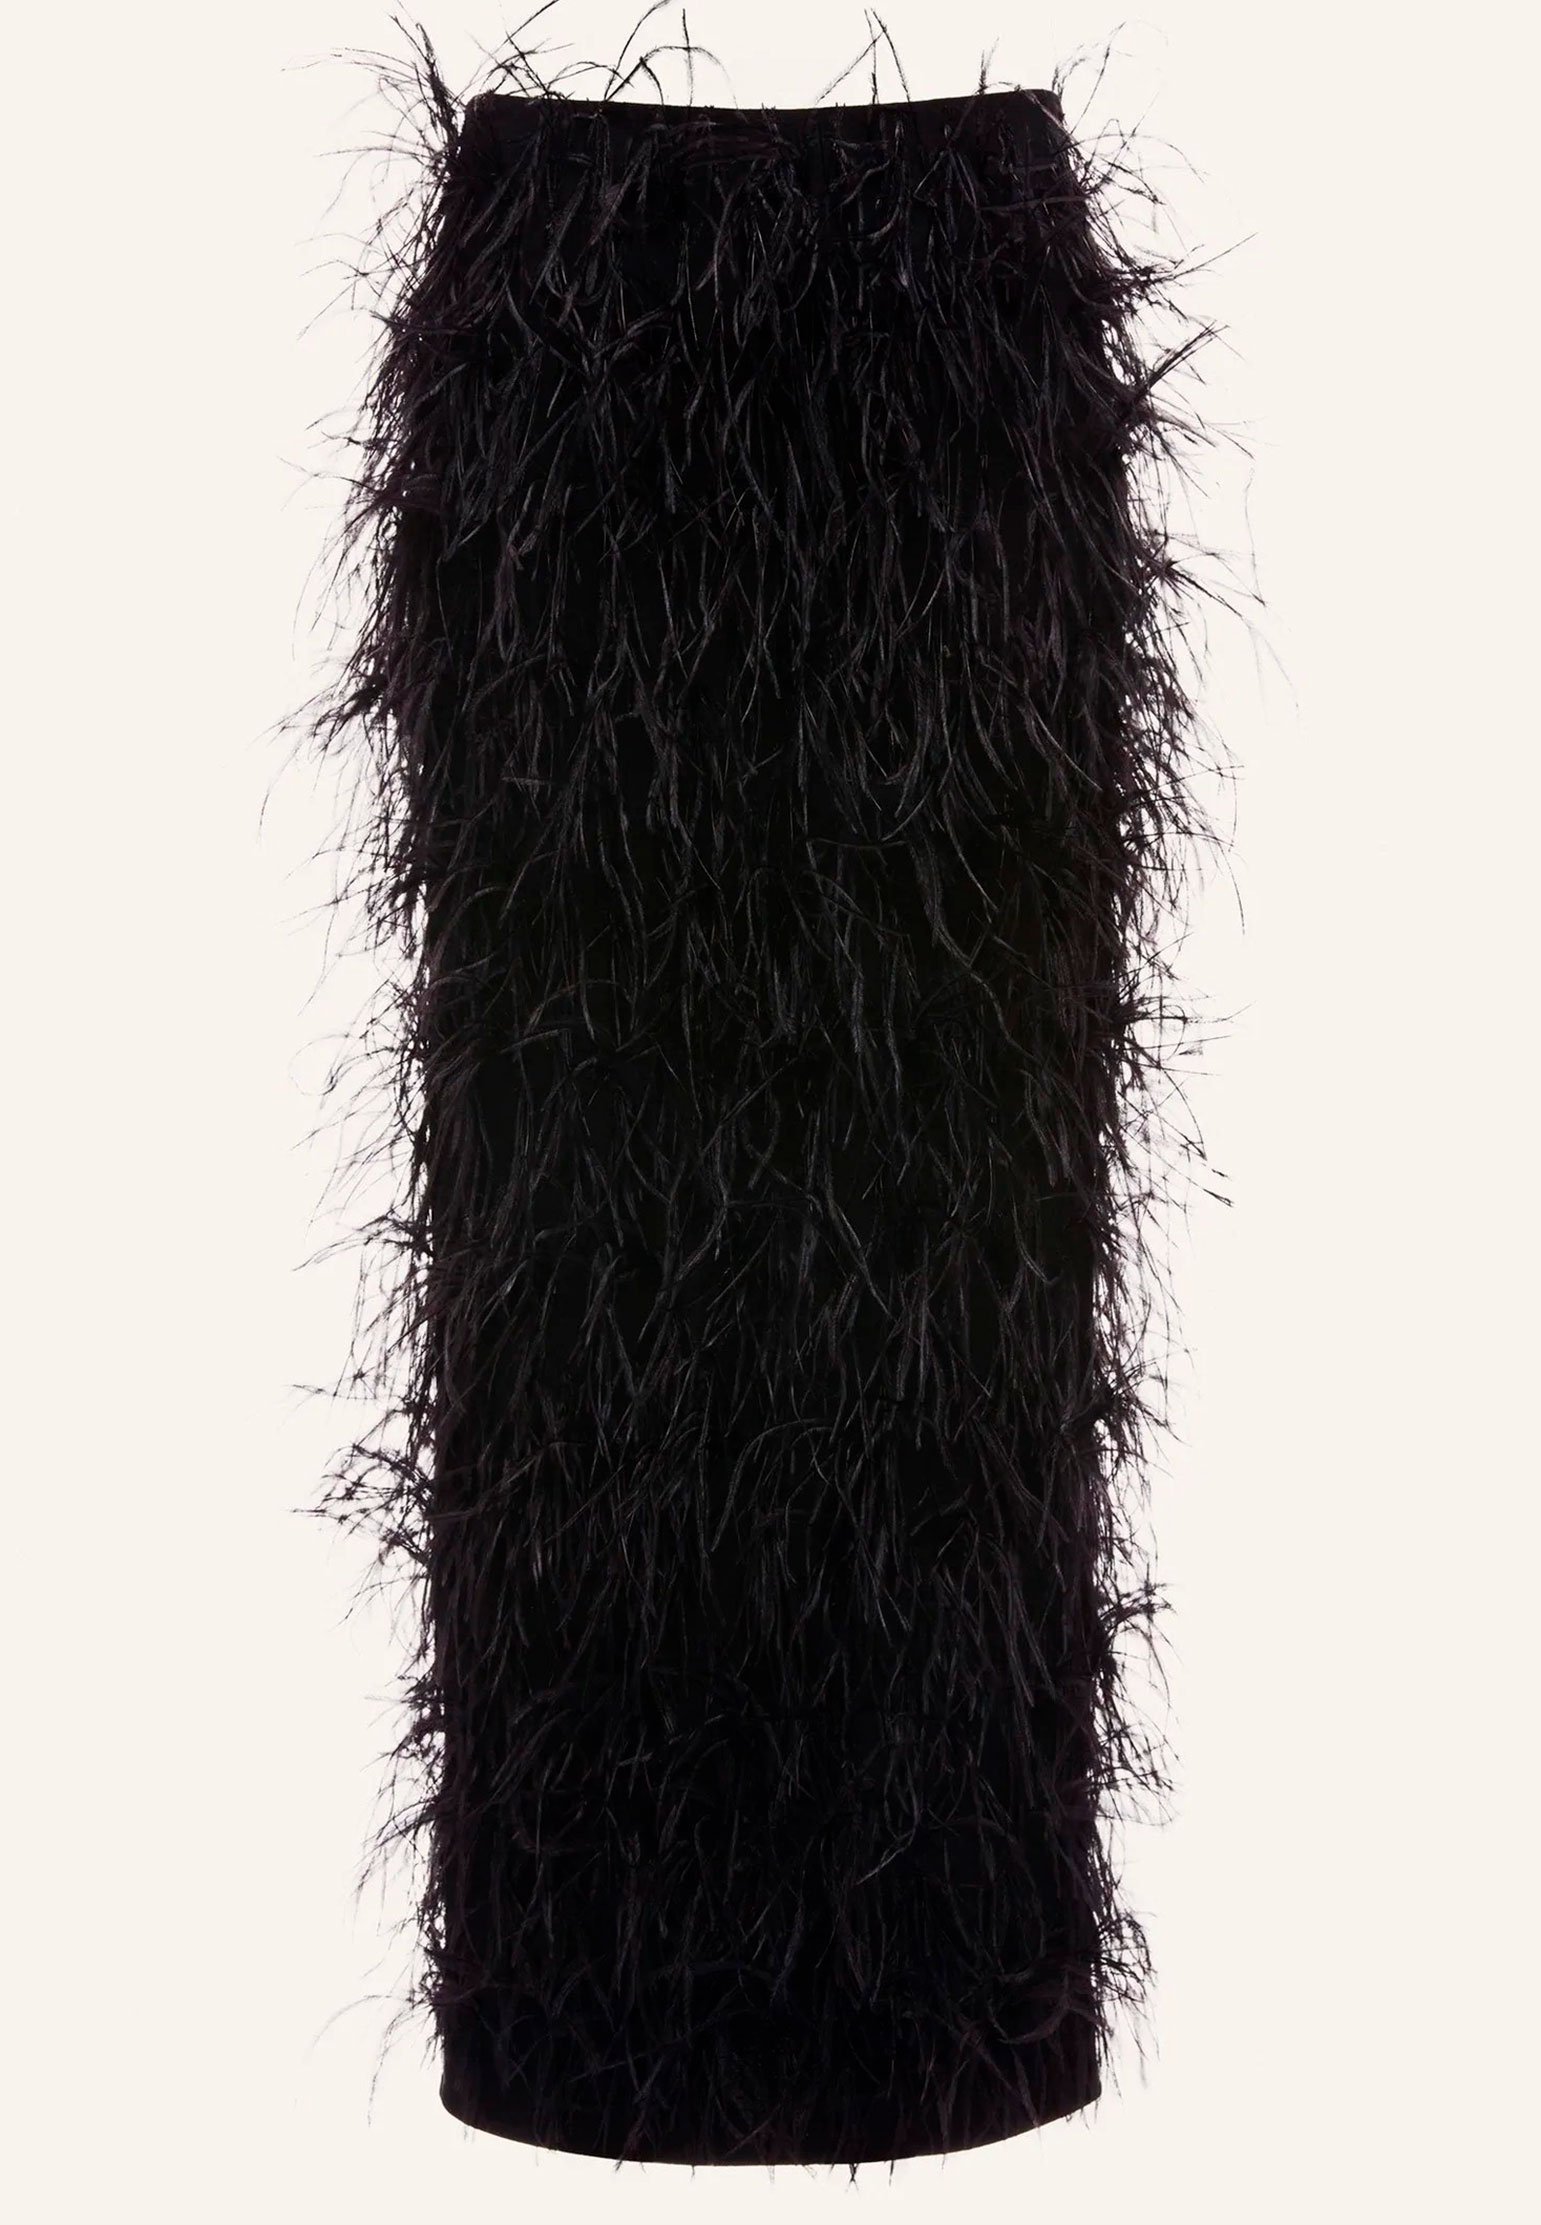 Skirt MAGDA BUTRYM Color: black (Code: 945) in online store Allure